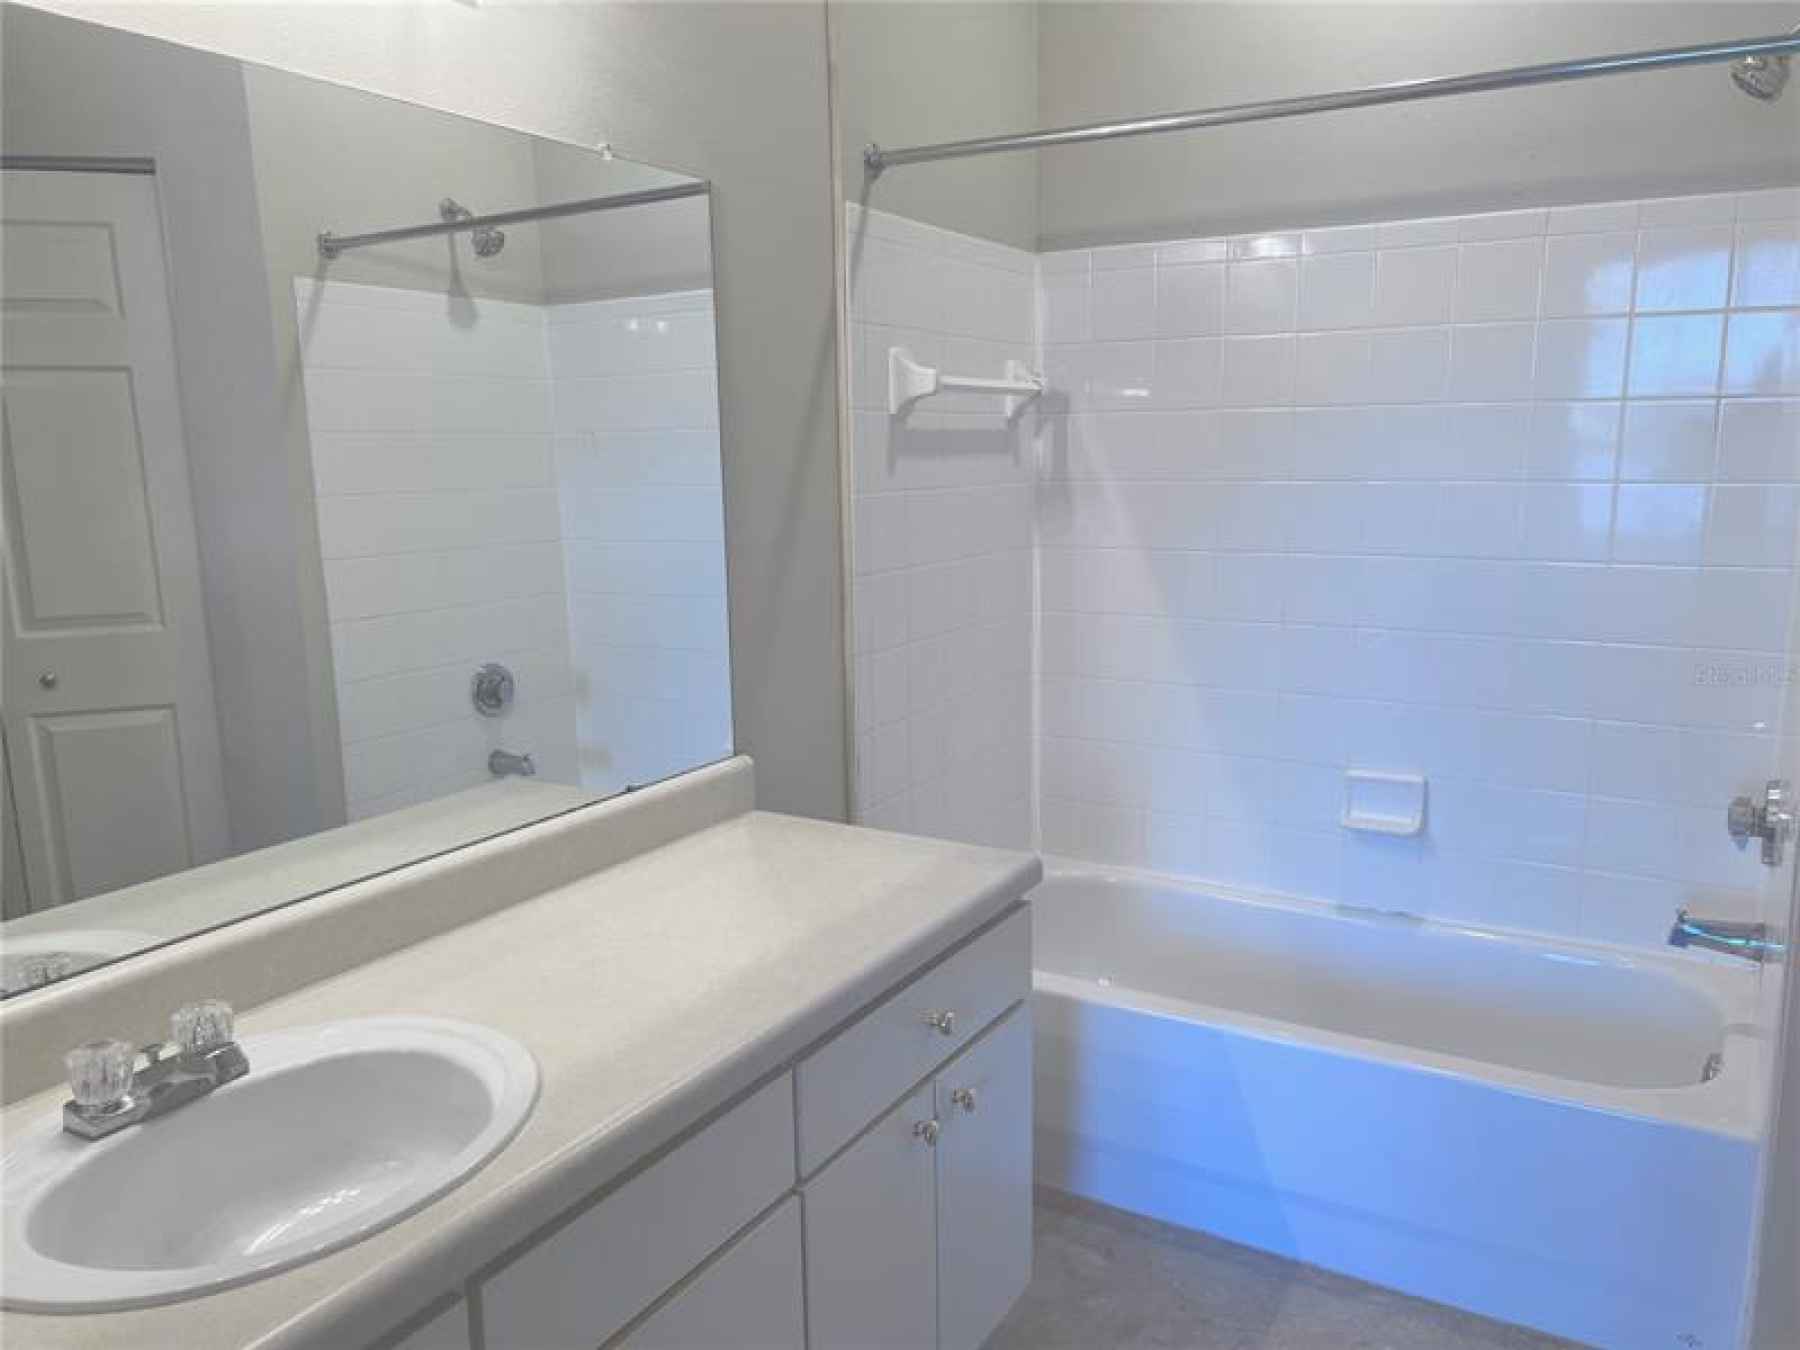 2nd Bathroom (shower tub)